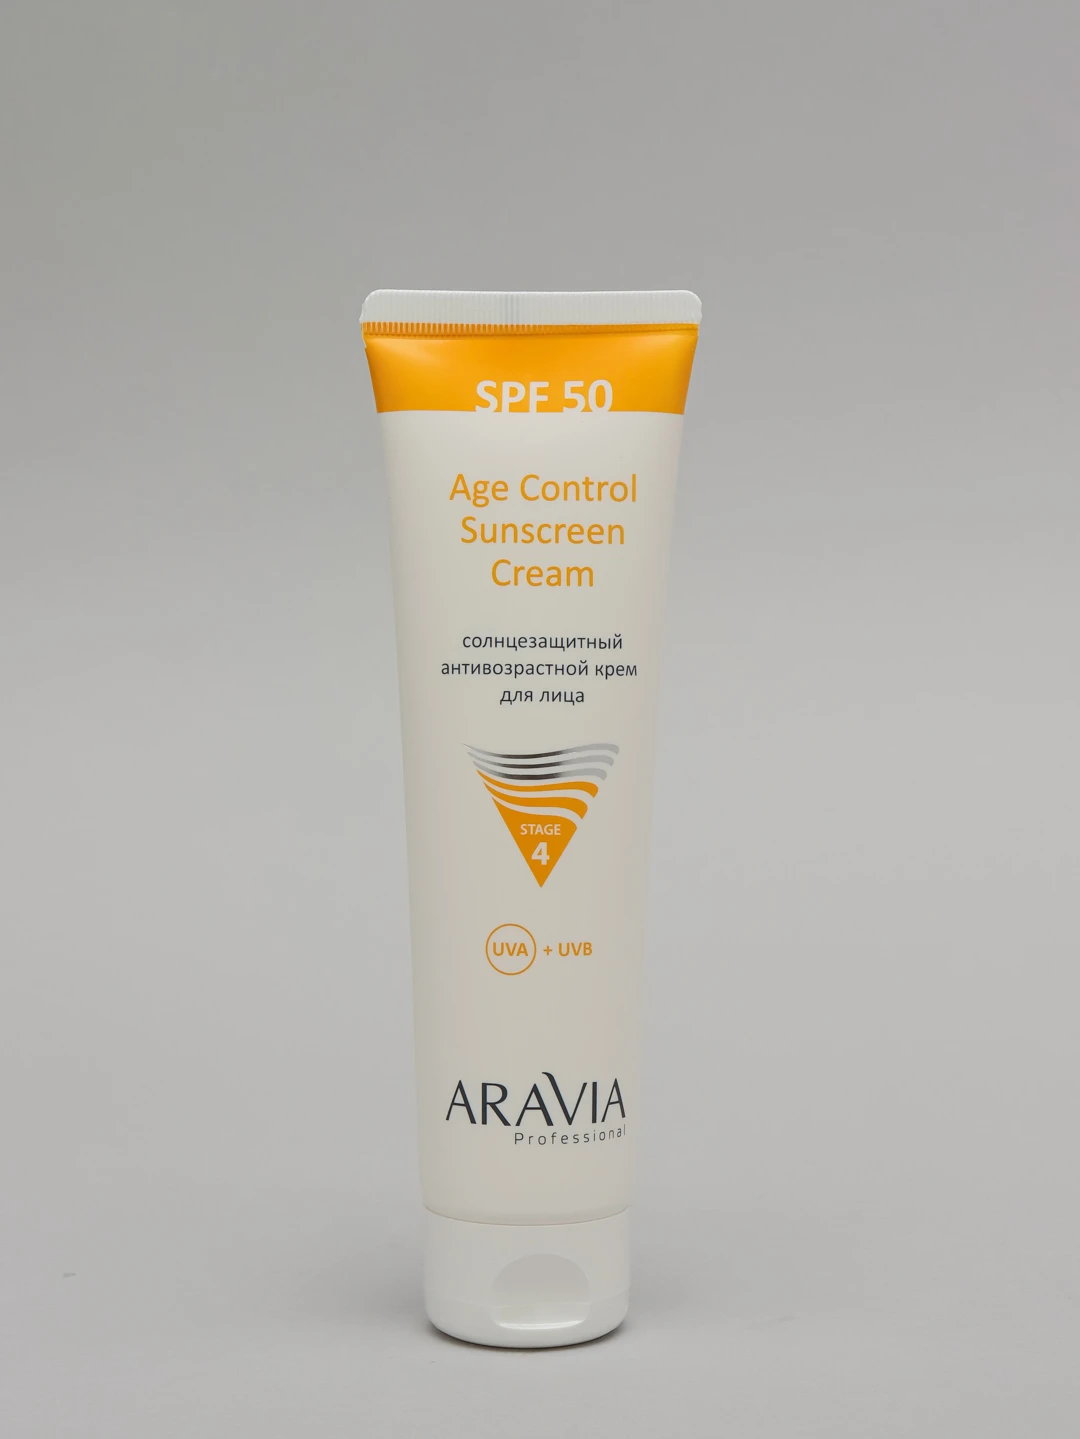 Aravia sunscreen spf 50. Аравия солнцезащитный крем SPF 50. Аравия СПФ 50 для лица. Защитный крем СПФ 50 Аравия. Аравия крем с СПФ.